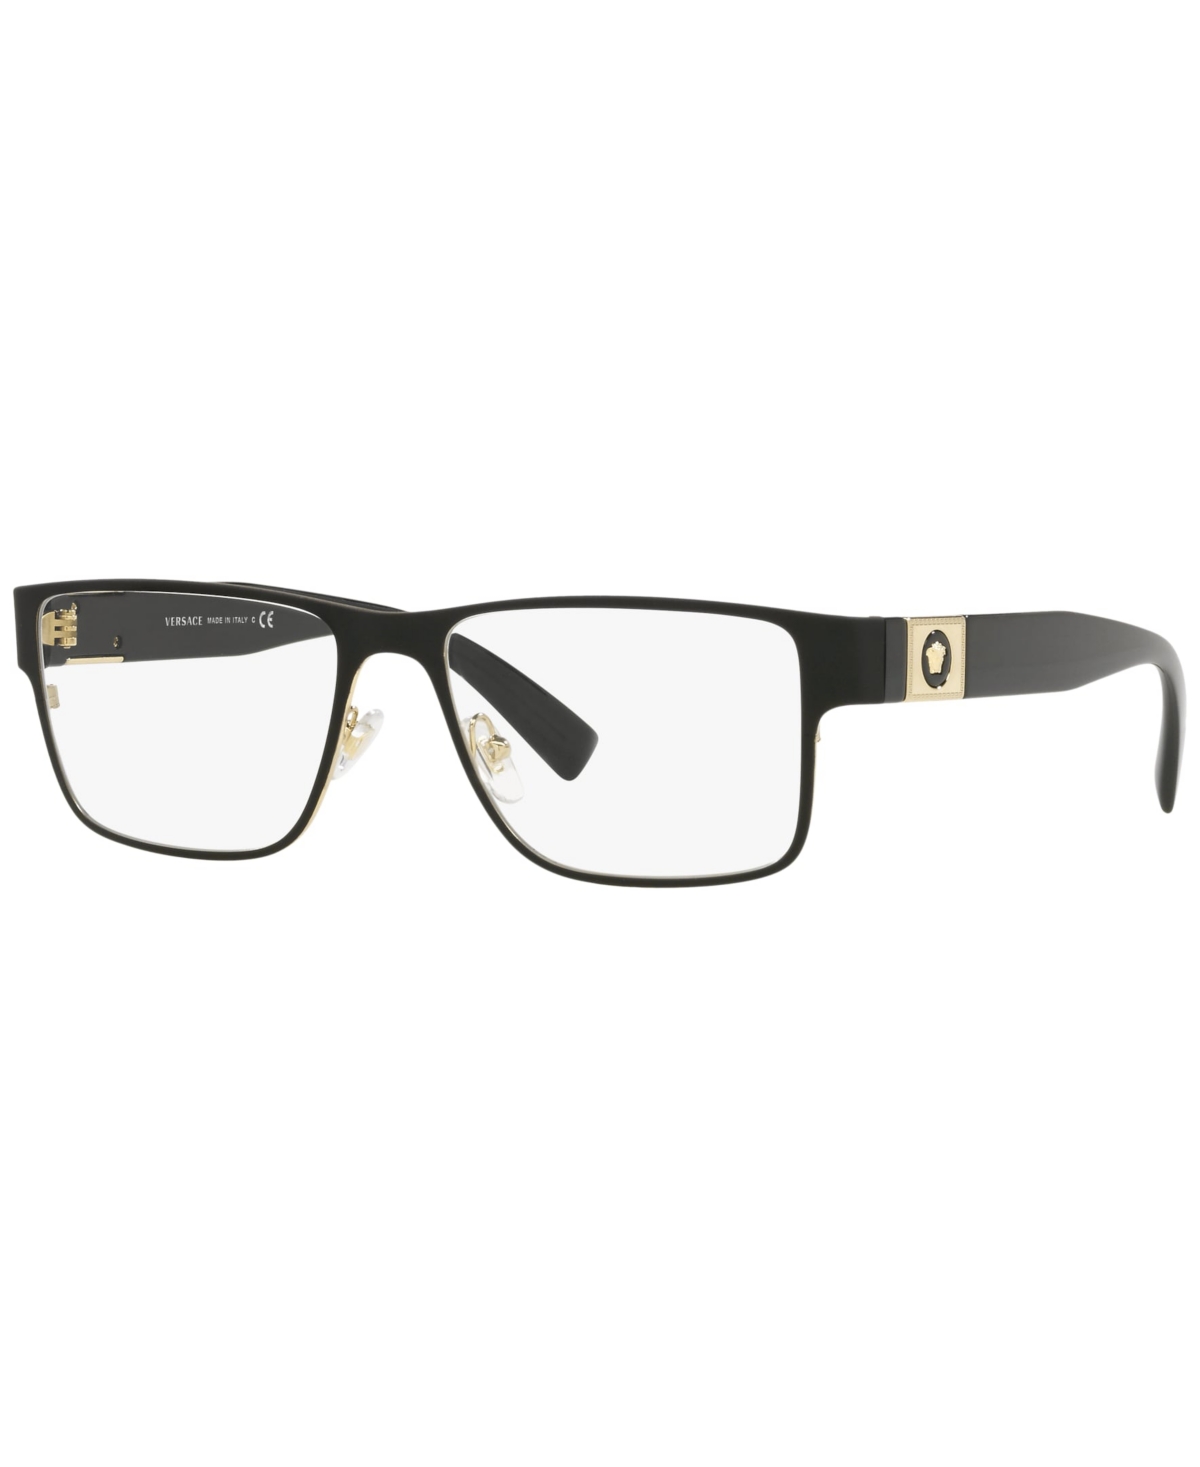 VE1274 Men's Rectangle Eyeglasses - Matte Black, Gold-Tone